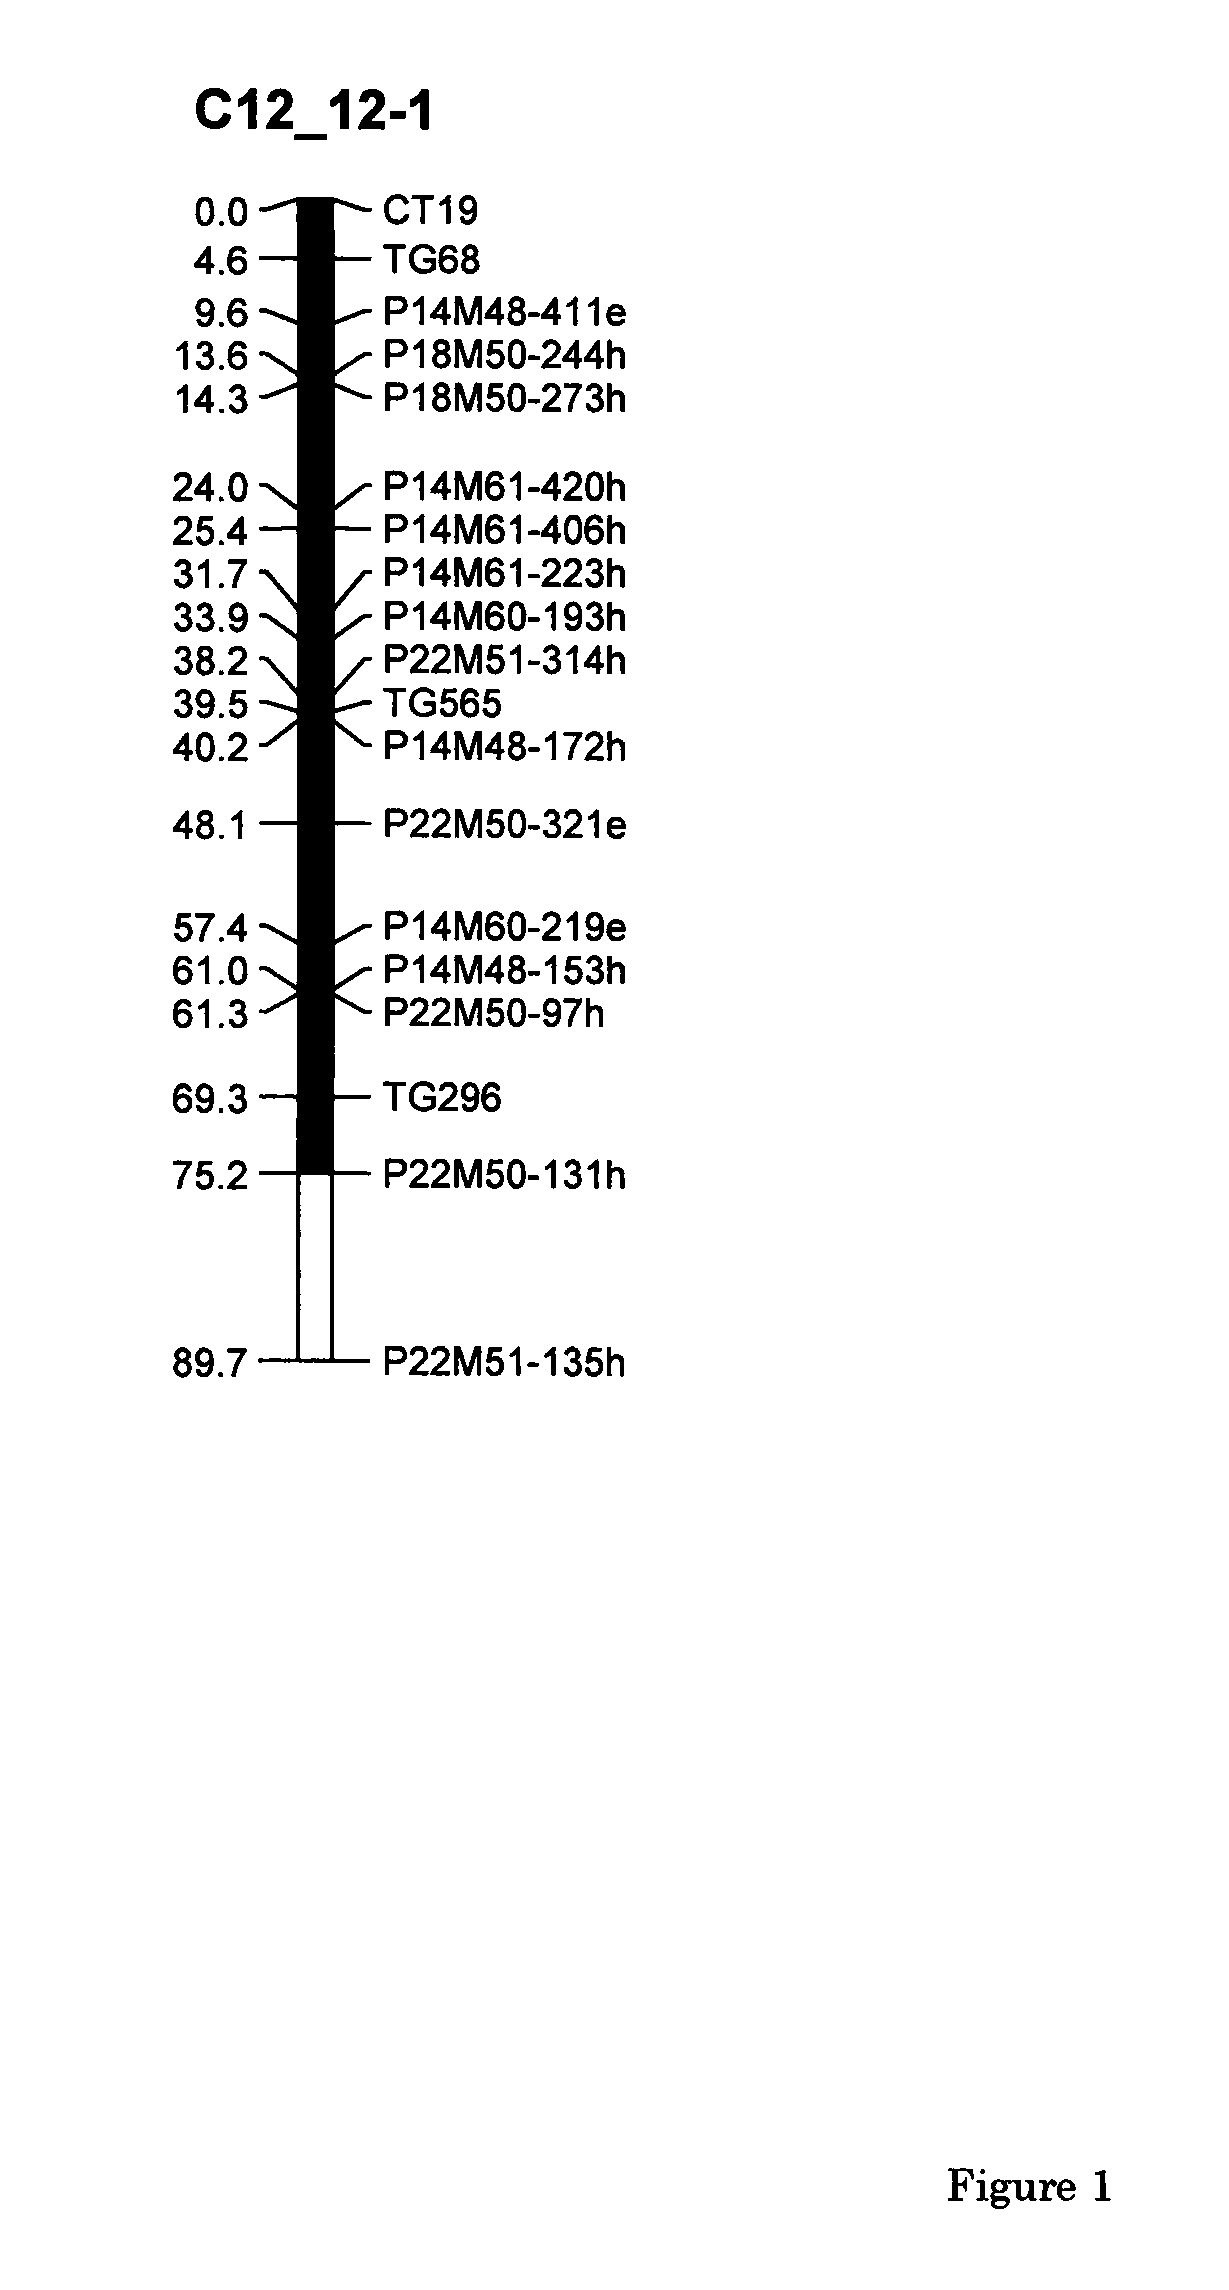 Parthenocarpic genetic elements derived from <i>S. habrochaites</i>